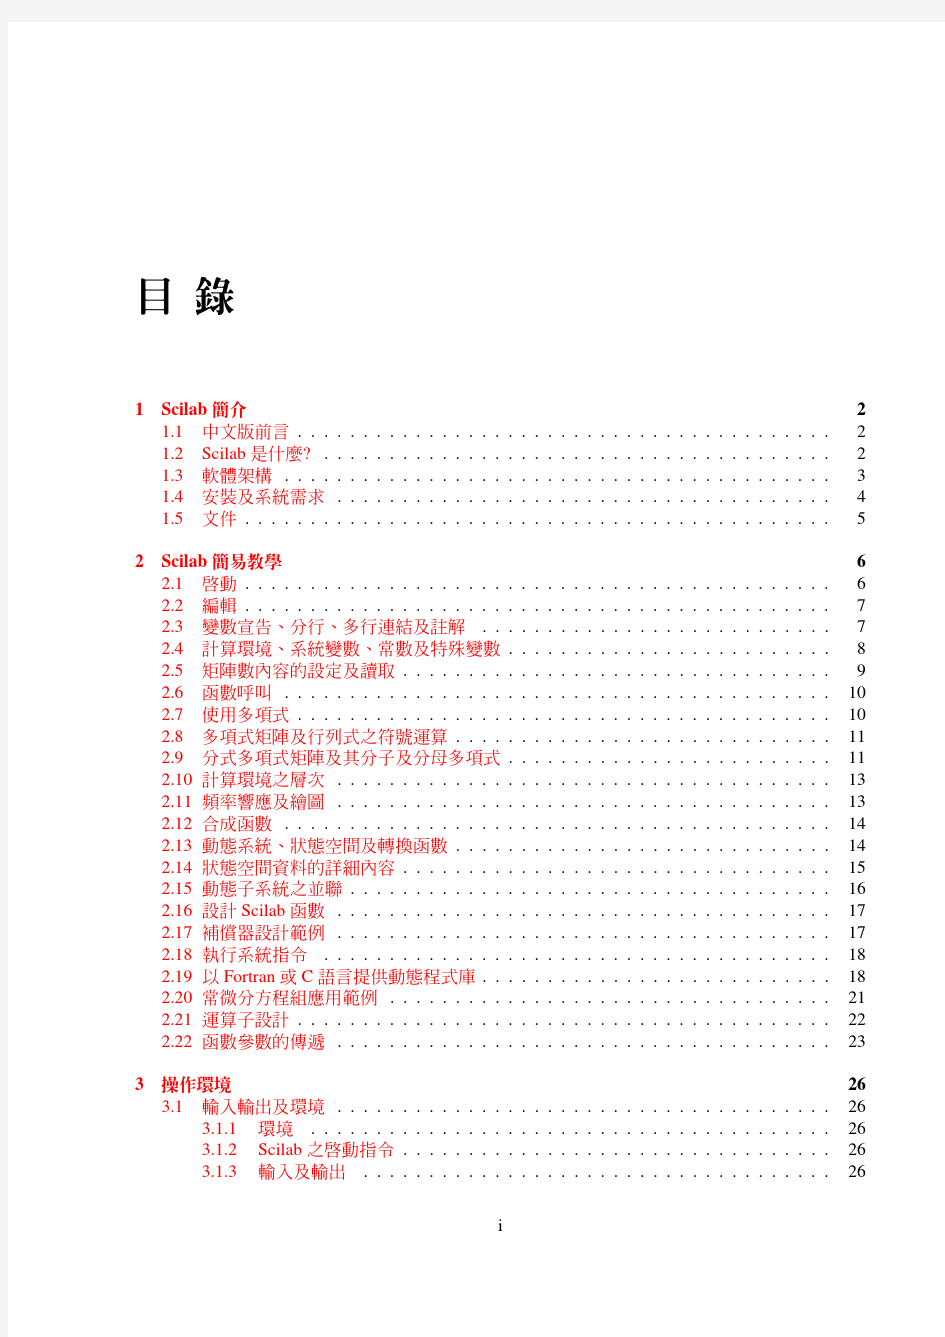 scilab中文手册